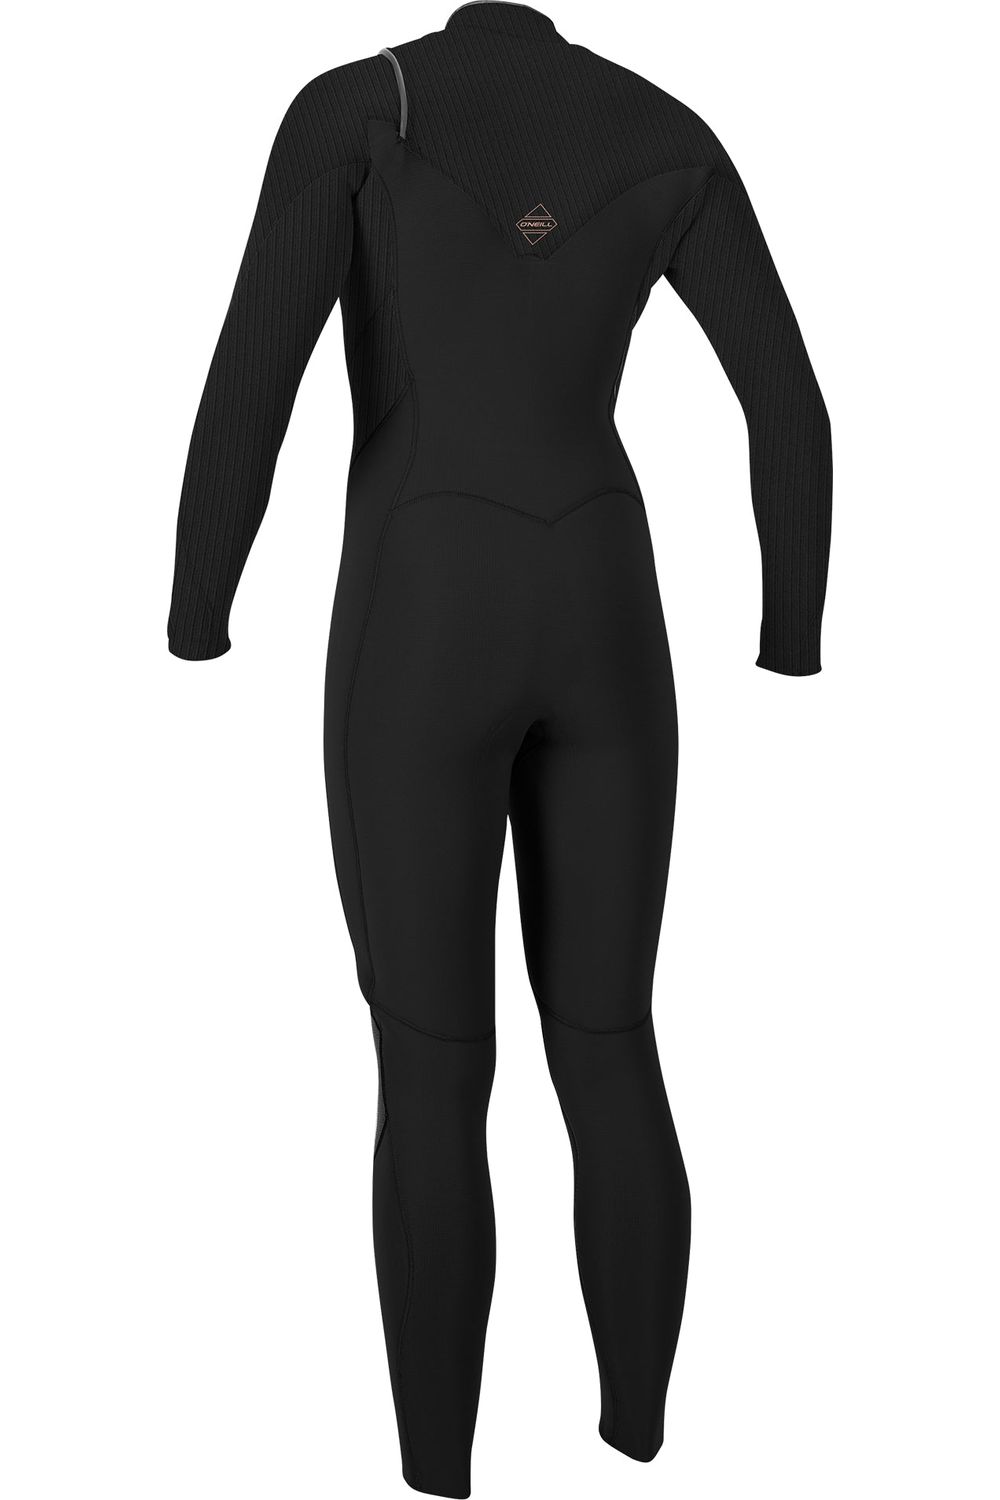 O'Neill Hyperfreak Women's Wetsuit 3/2+ With Chest Zip In Black